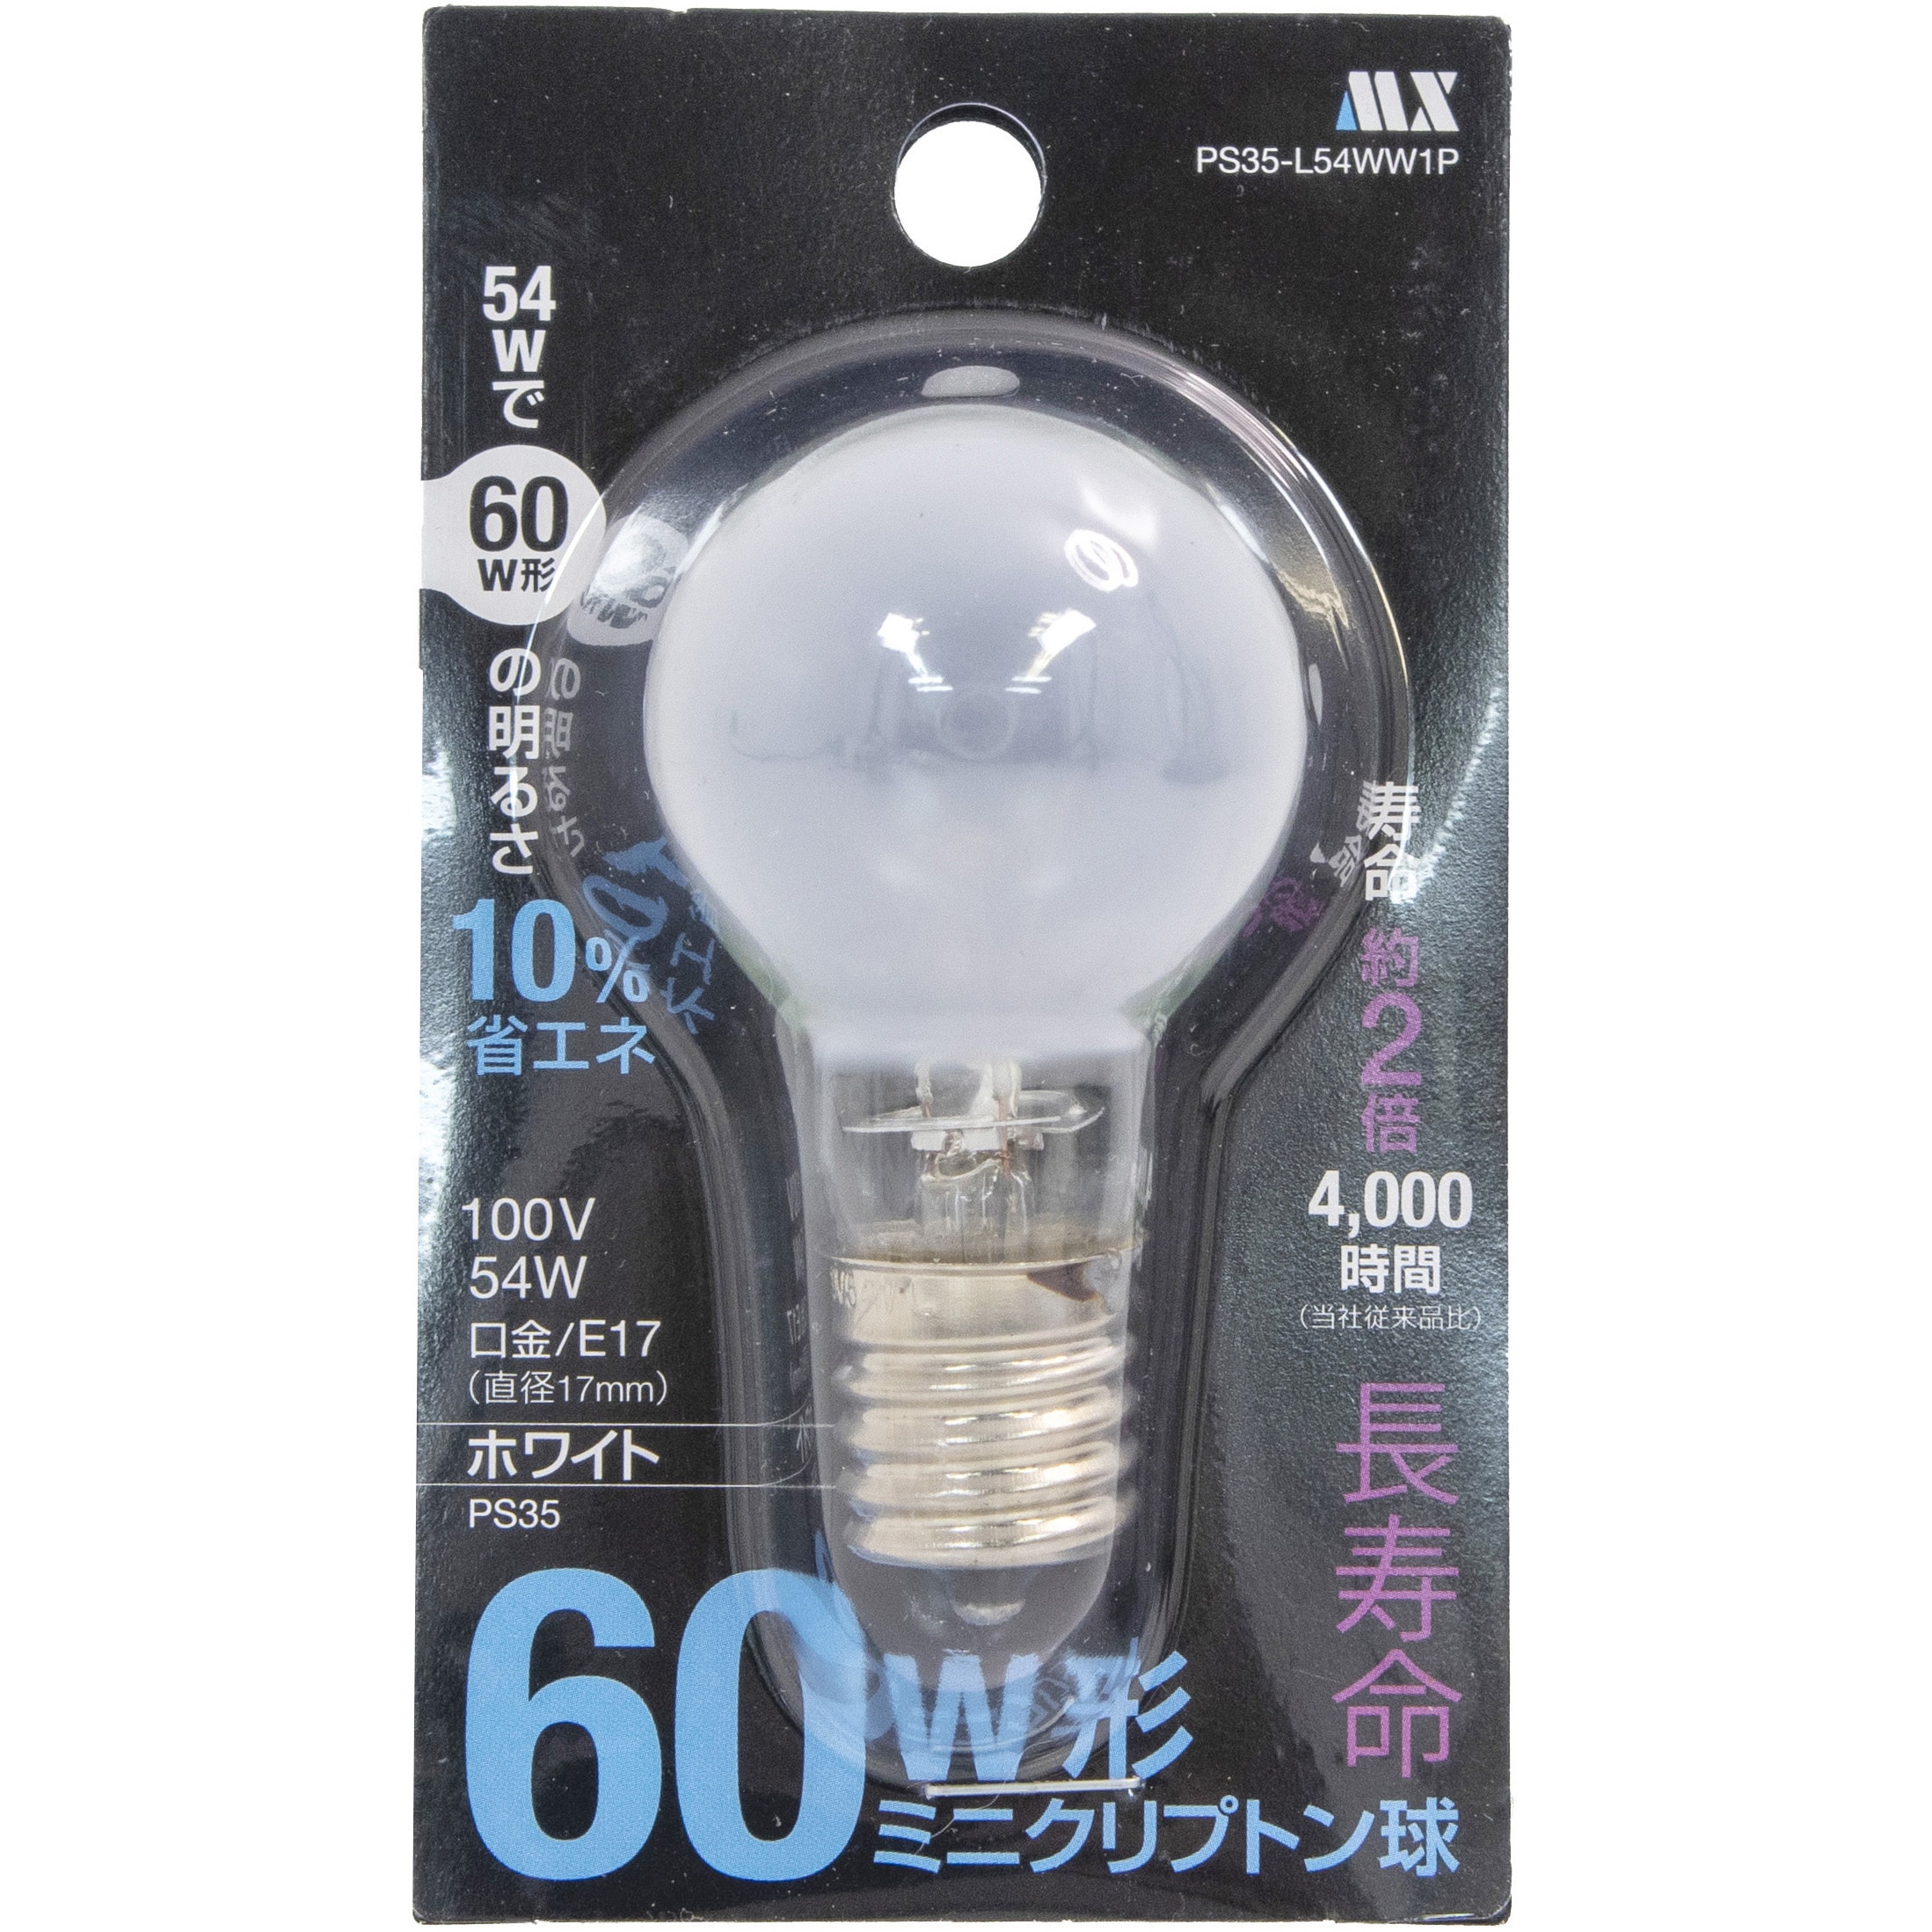 PS35-L54WW1P 【白熱電球】長寿命ミニクリプトン電球 60W形 1個入 1個 